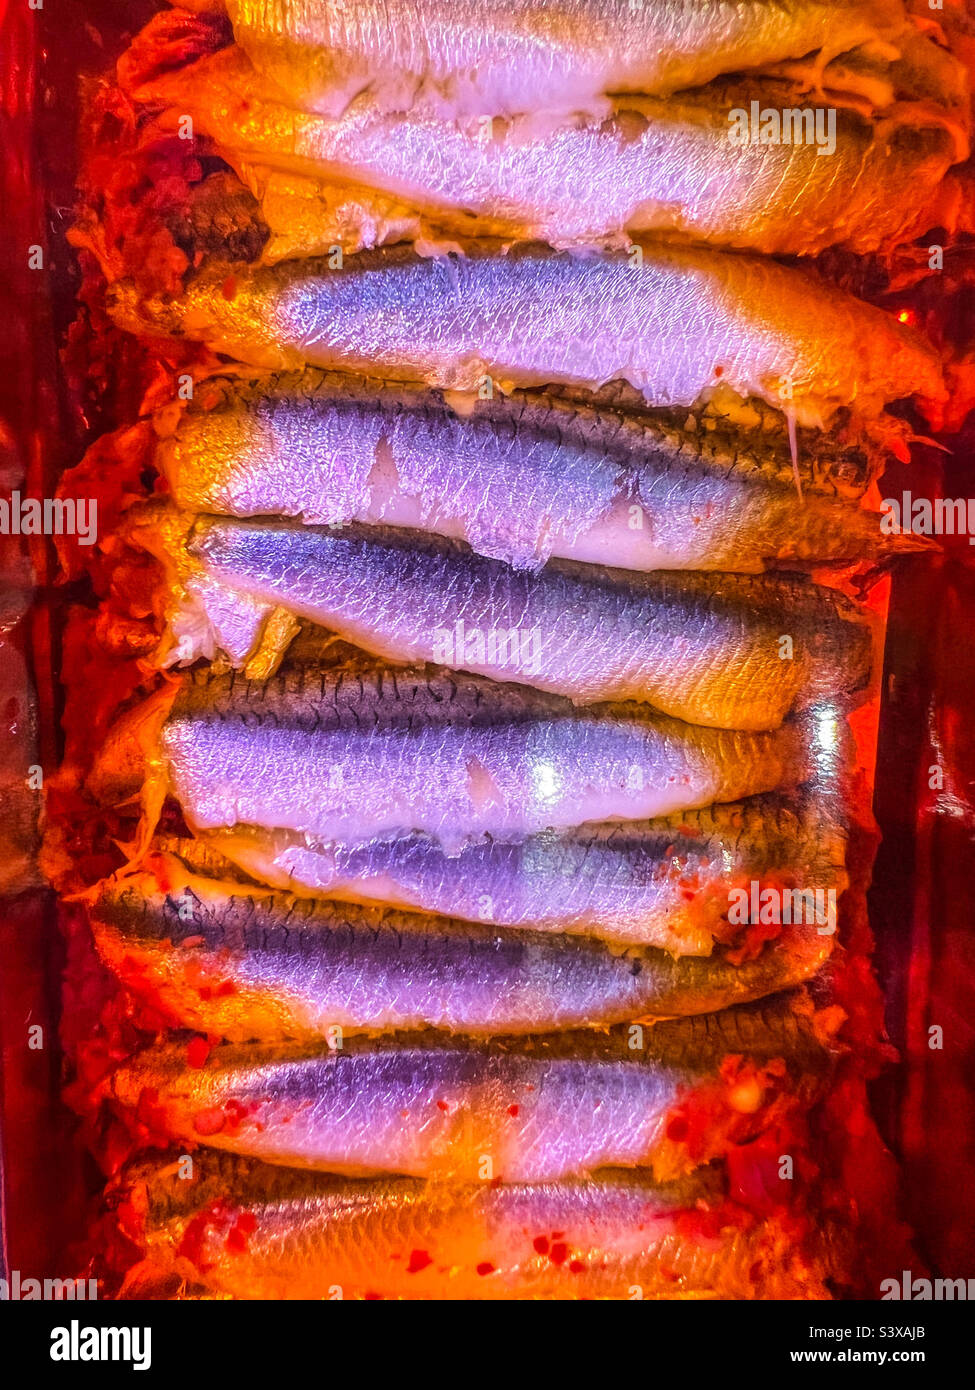 Sardines in tomato sauce Stock Photo